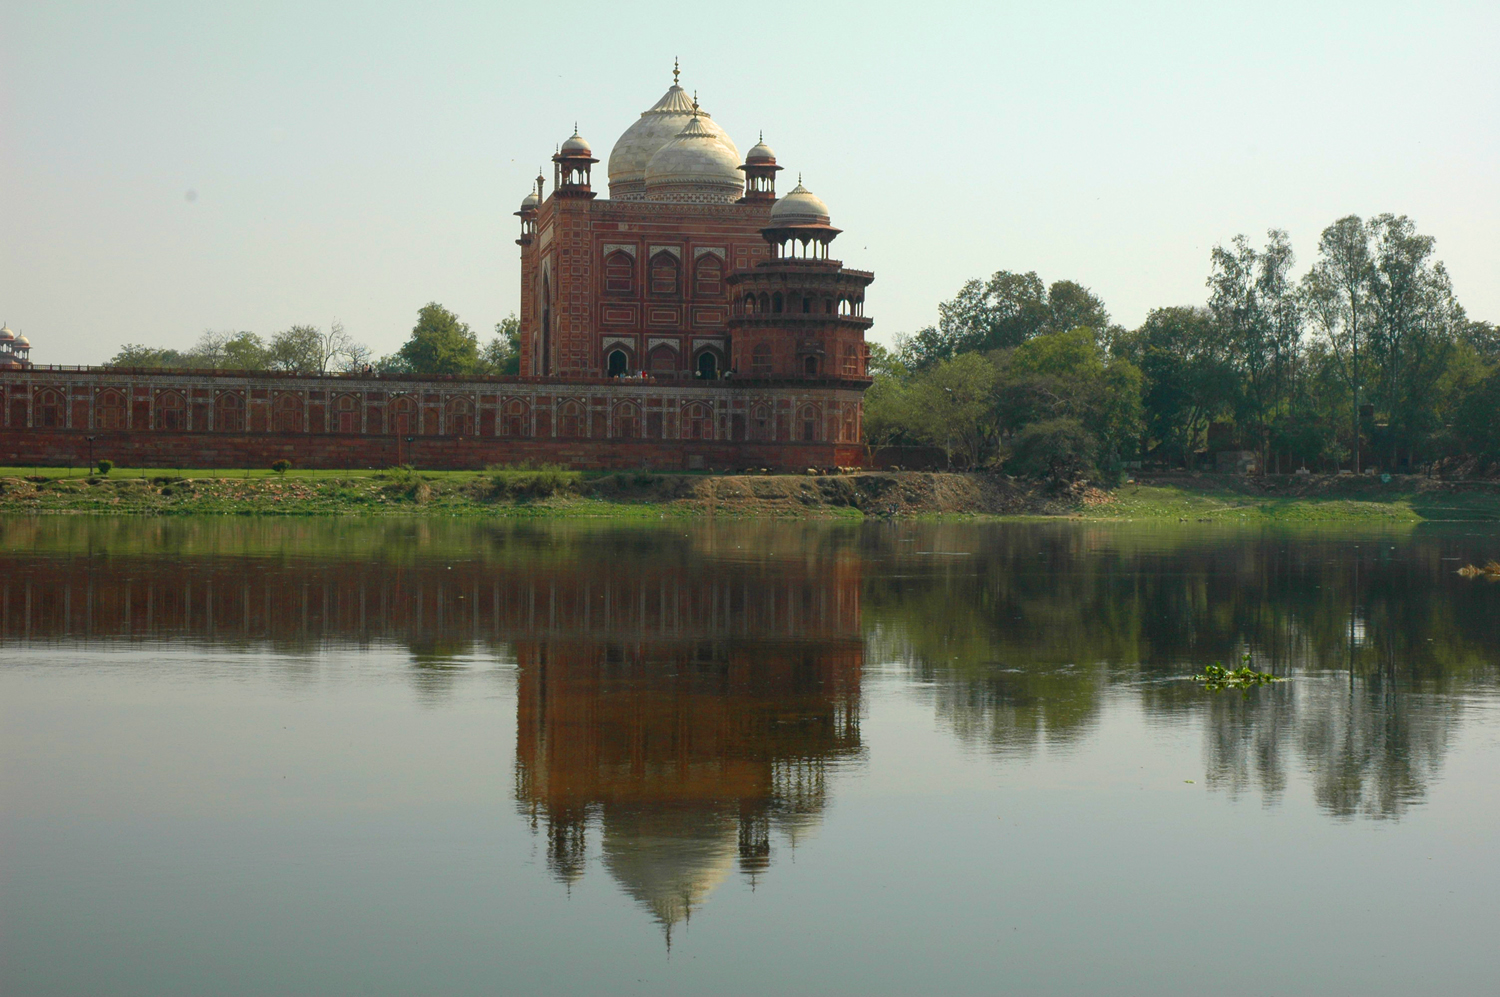 River pavilian and woodland behind the Taj Mahal, Agra, Uttar Pradesh, 18 March, 2007, photograph by Gordon Brent Ingram